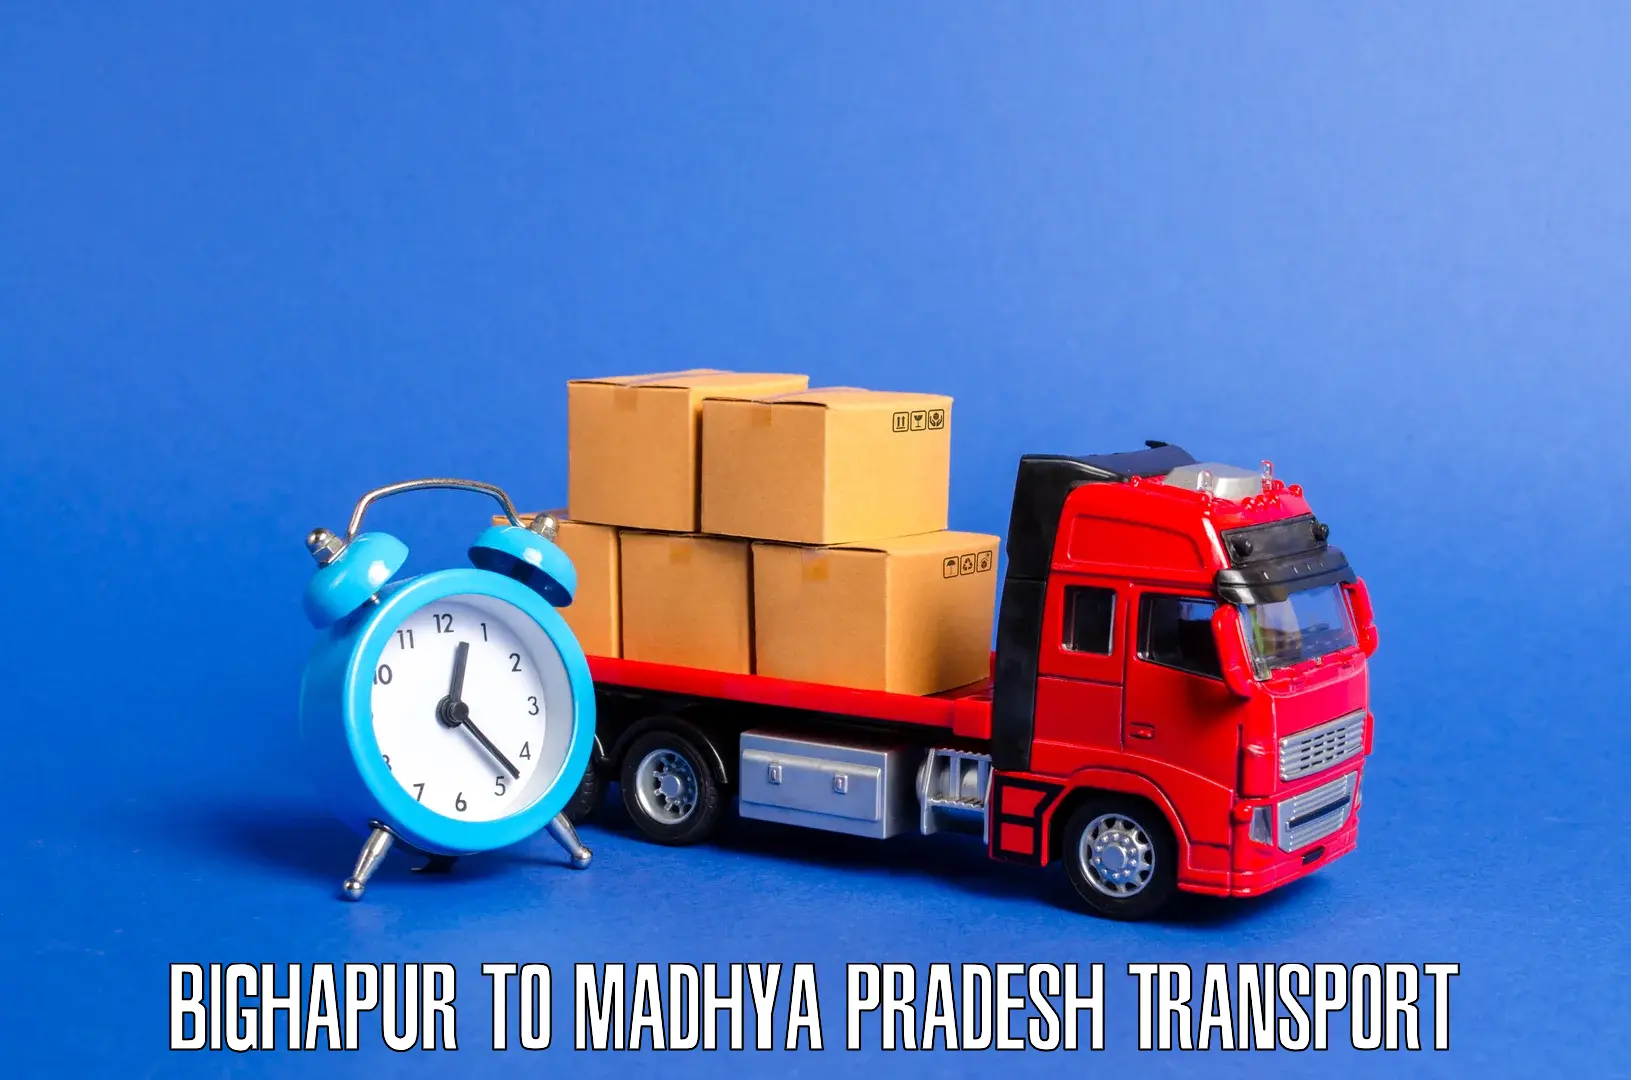 Road transport online services Bighapur to Ratlam